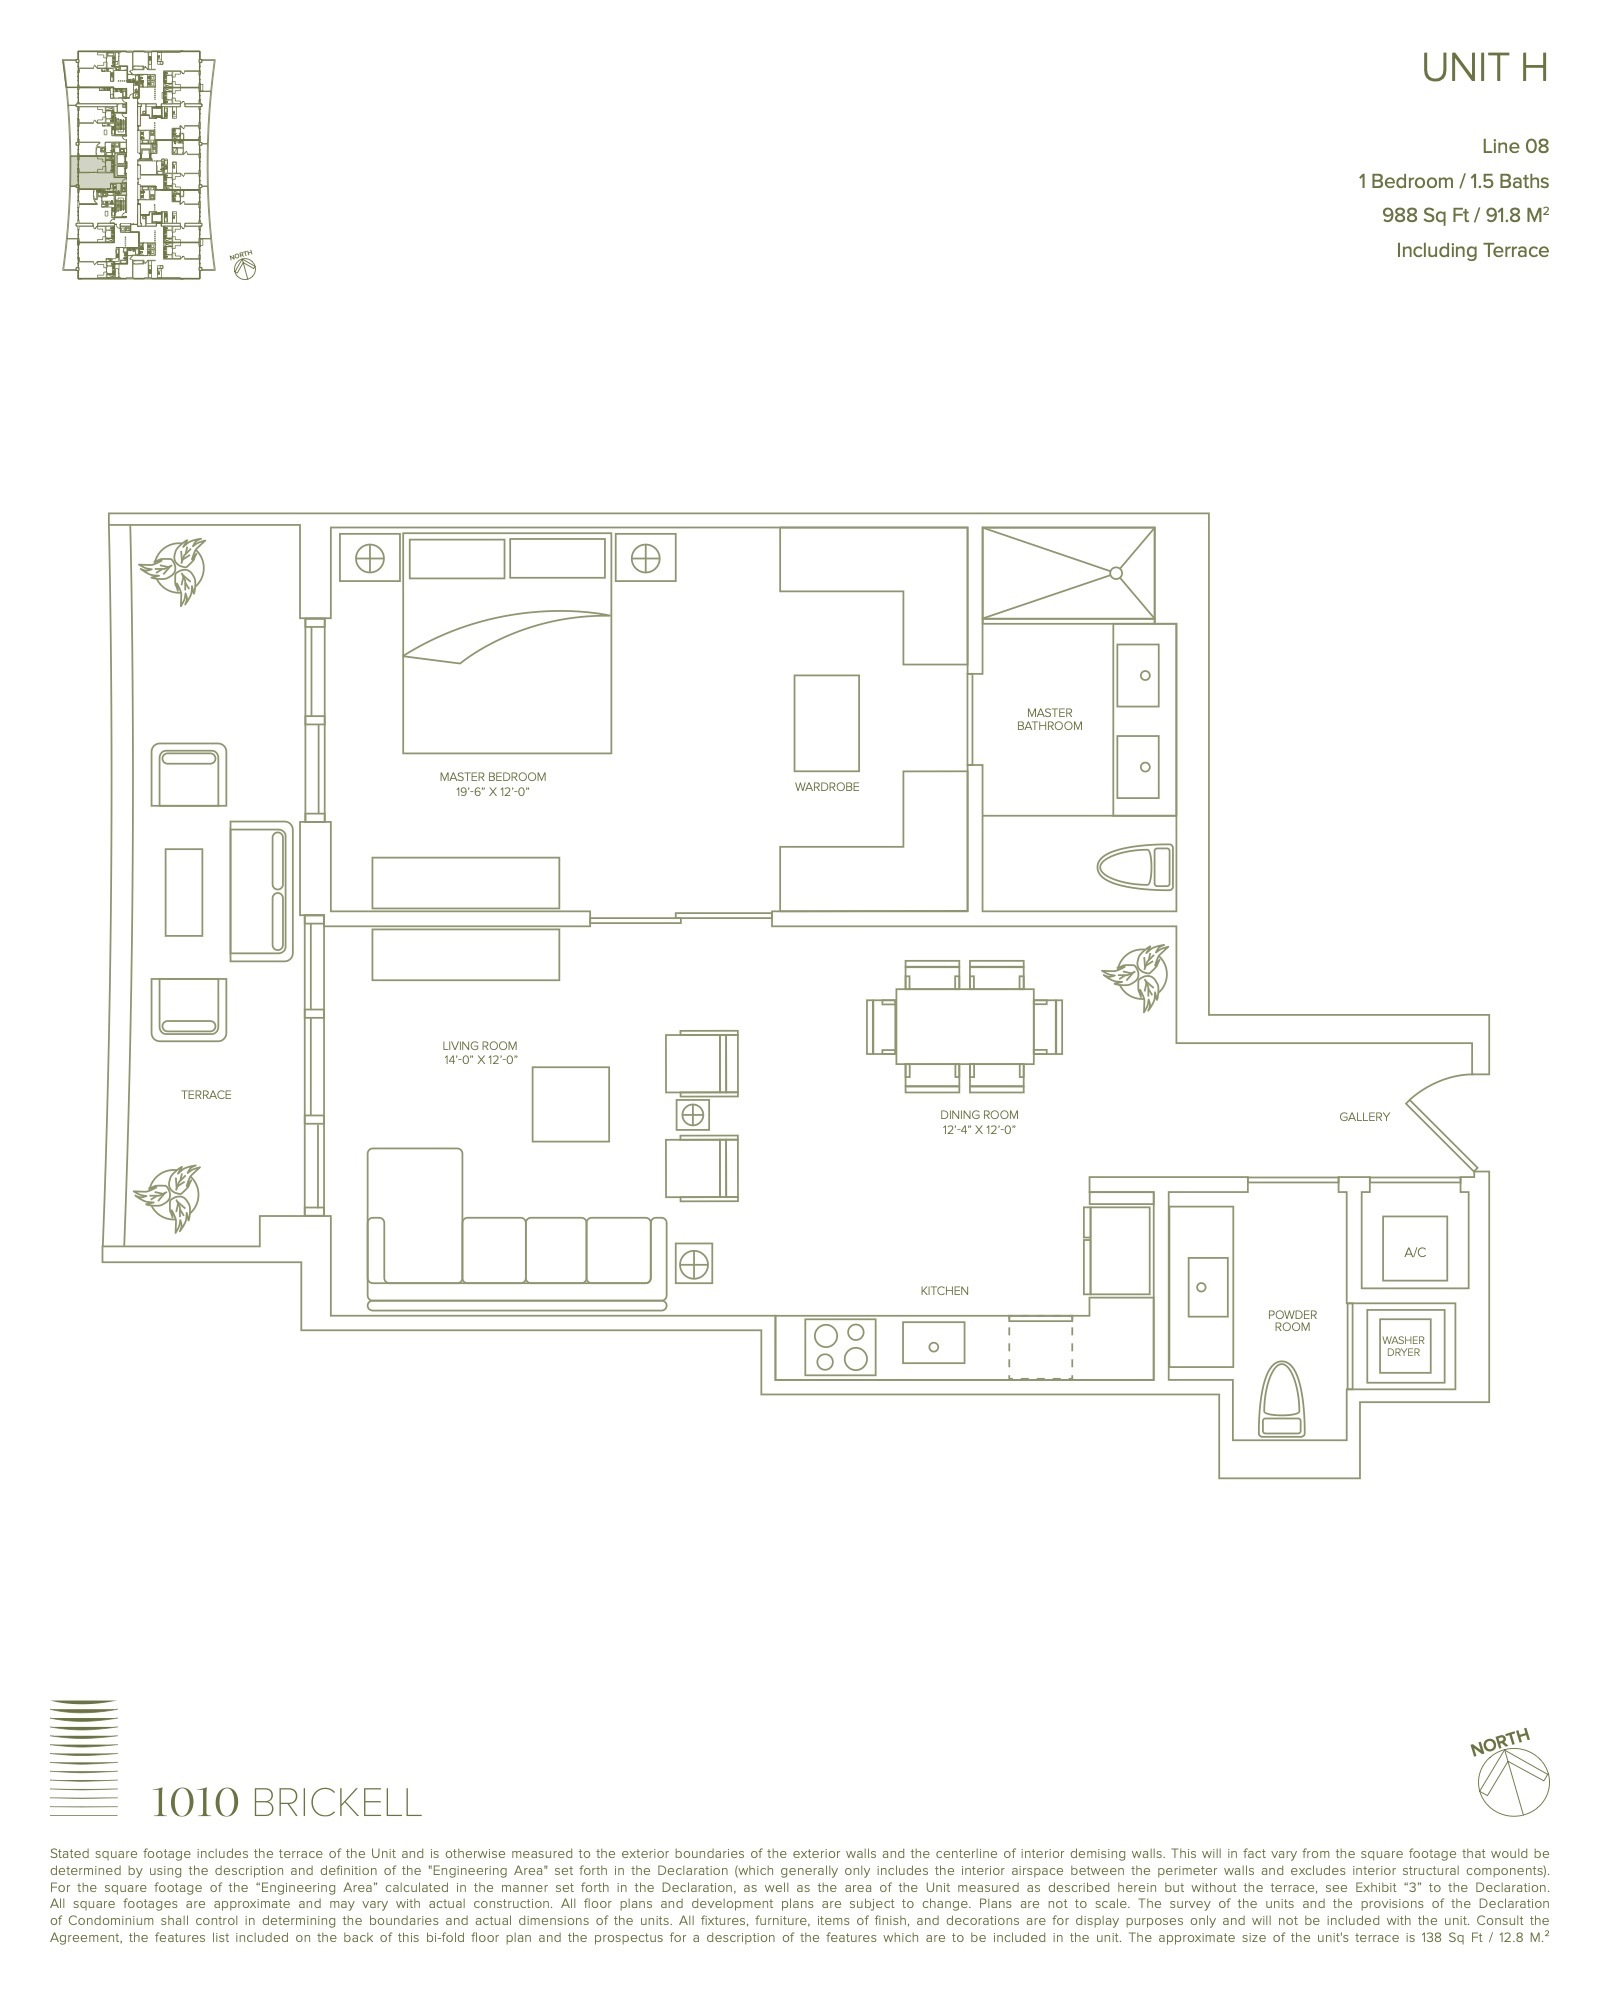 Floor Plan for 1010 Brickell Floorplans, Unit H